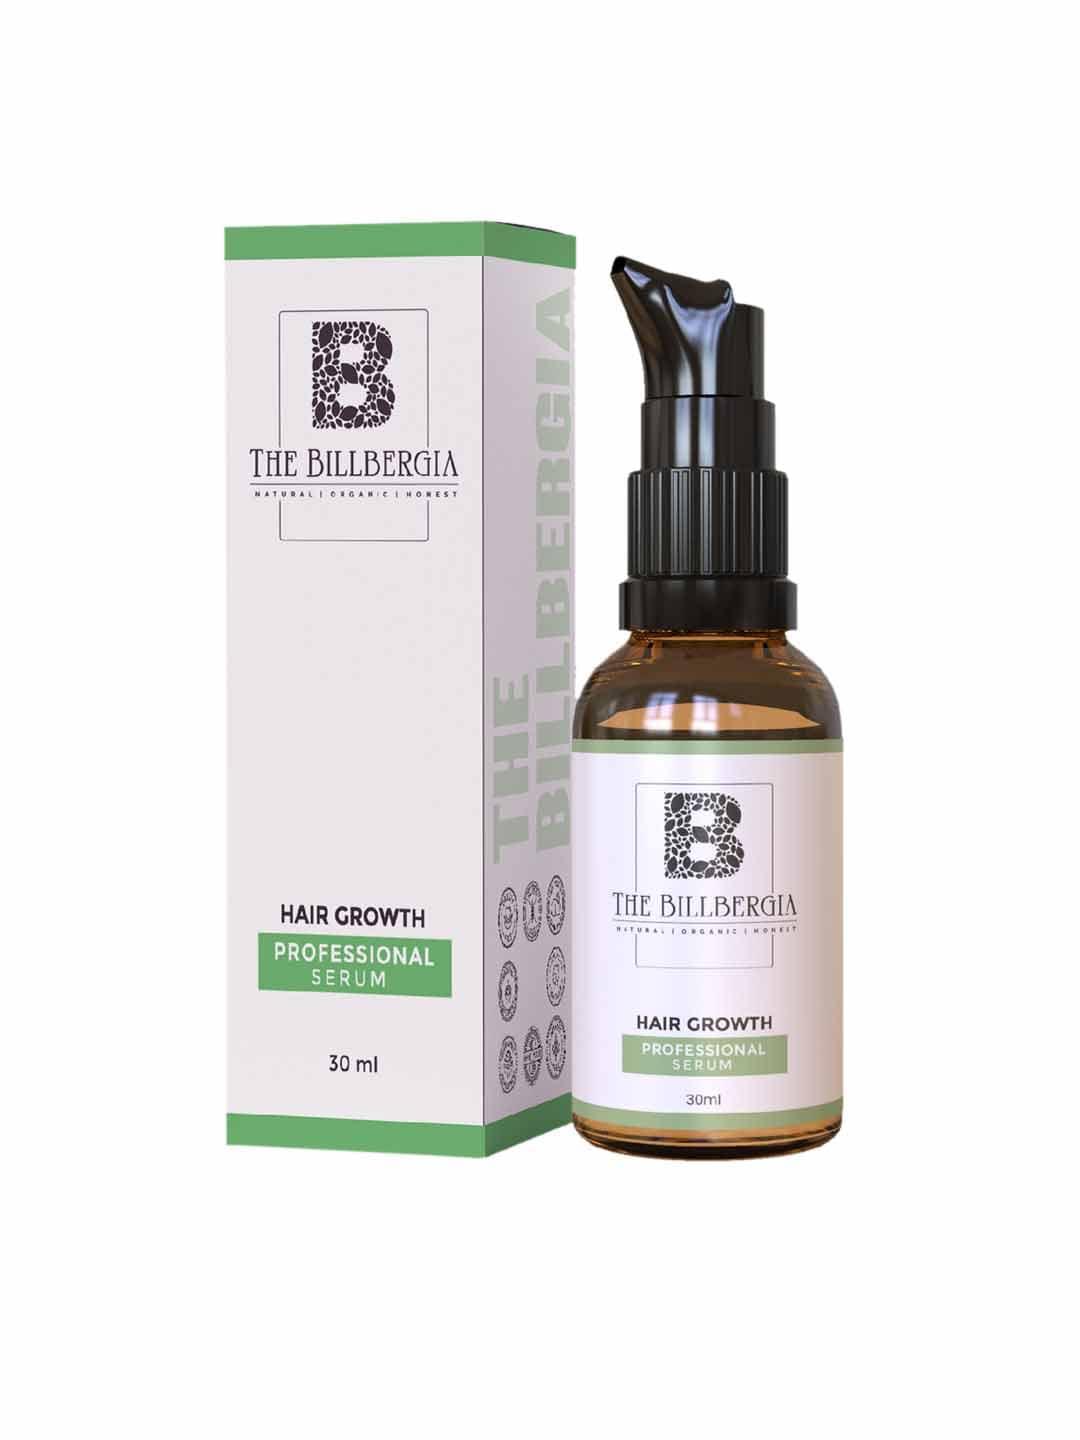 the-billbergia-hair-growth-professional-serum-with-argan-oil30-ml